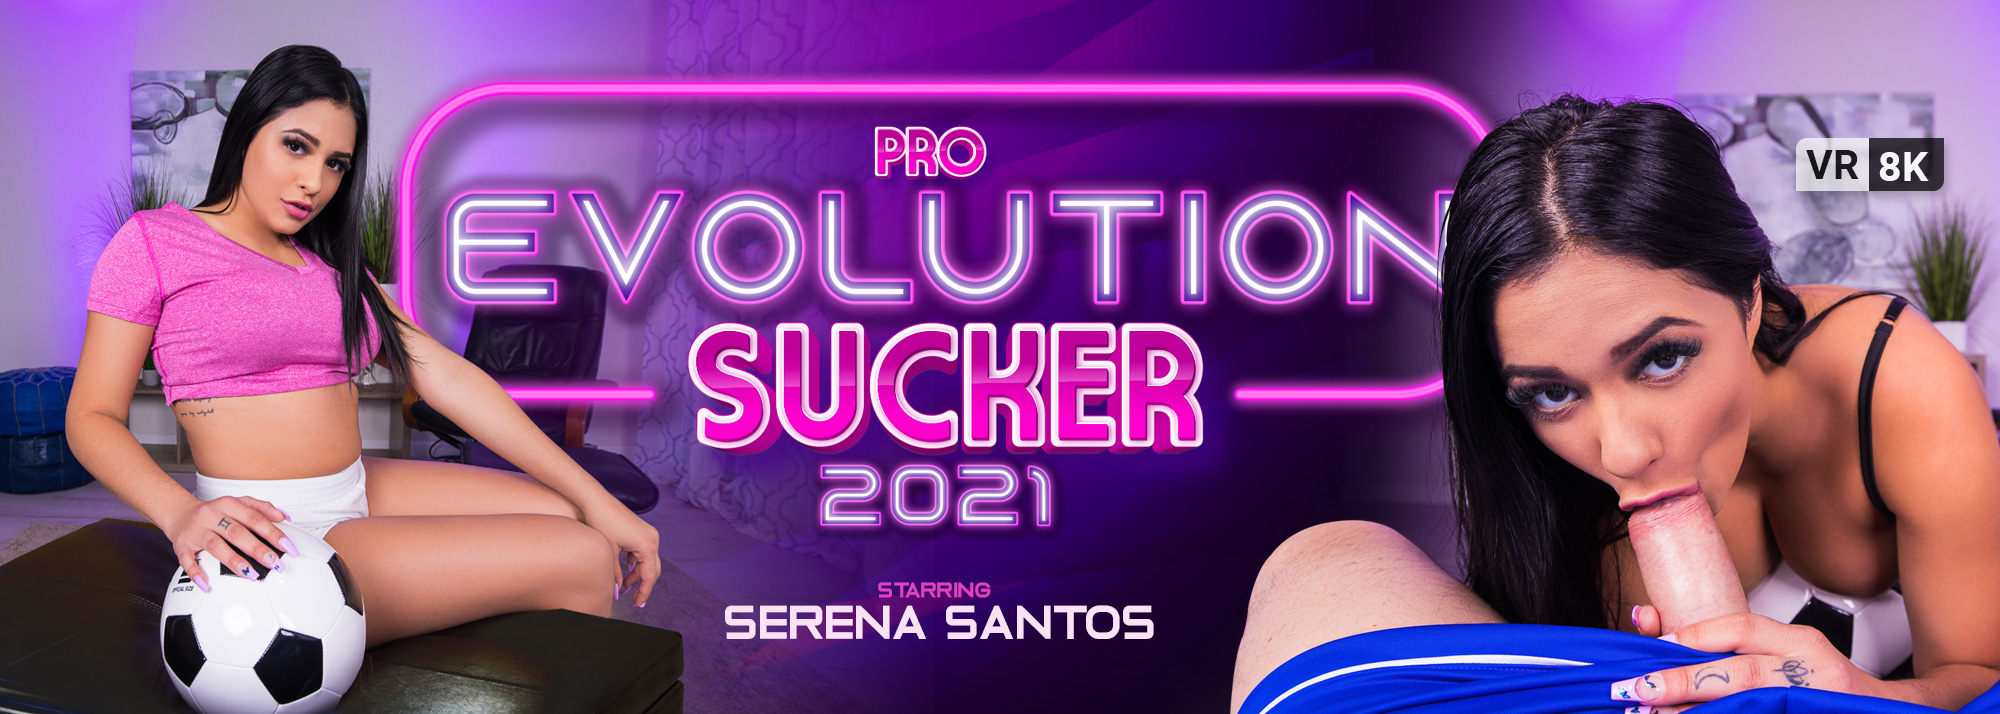 Pro Evolution Sucker 2021 - VR Porn Video, Starring Serena Santos VR